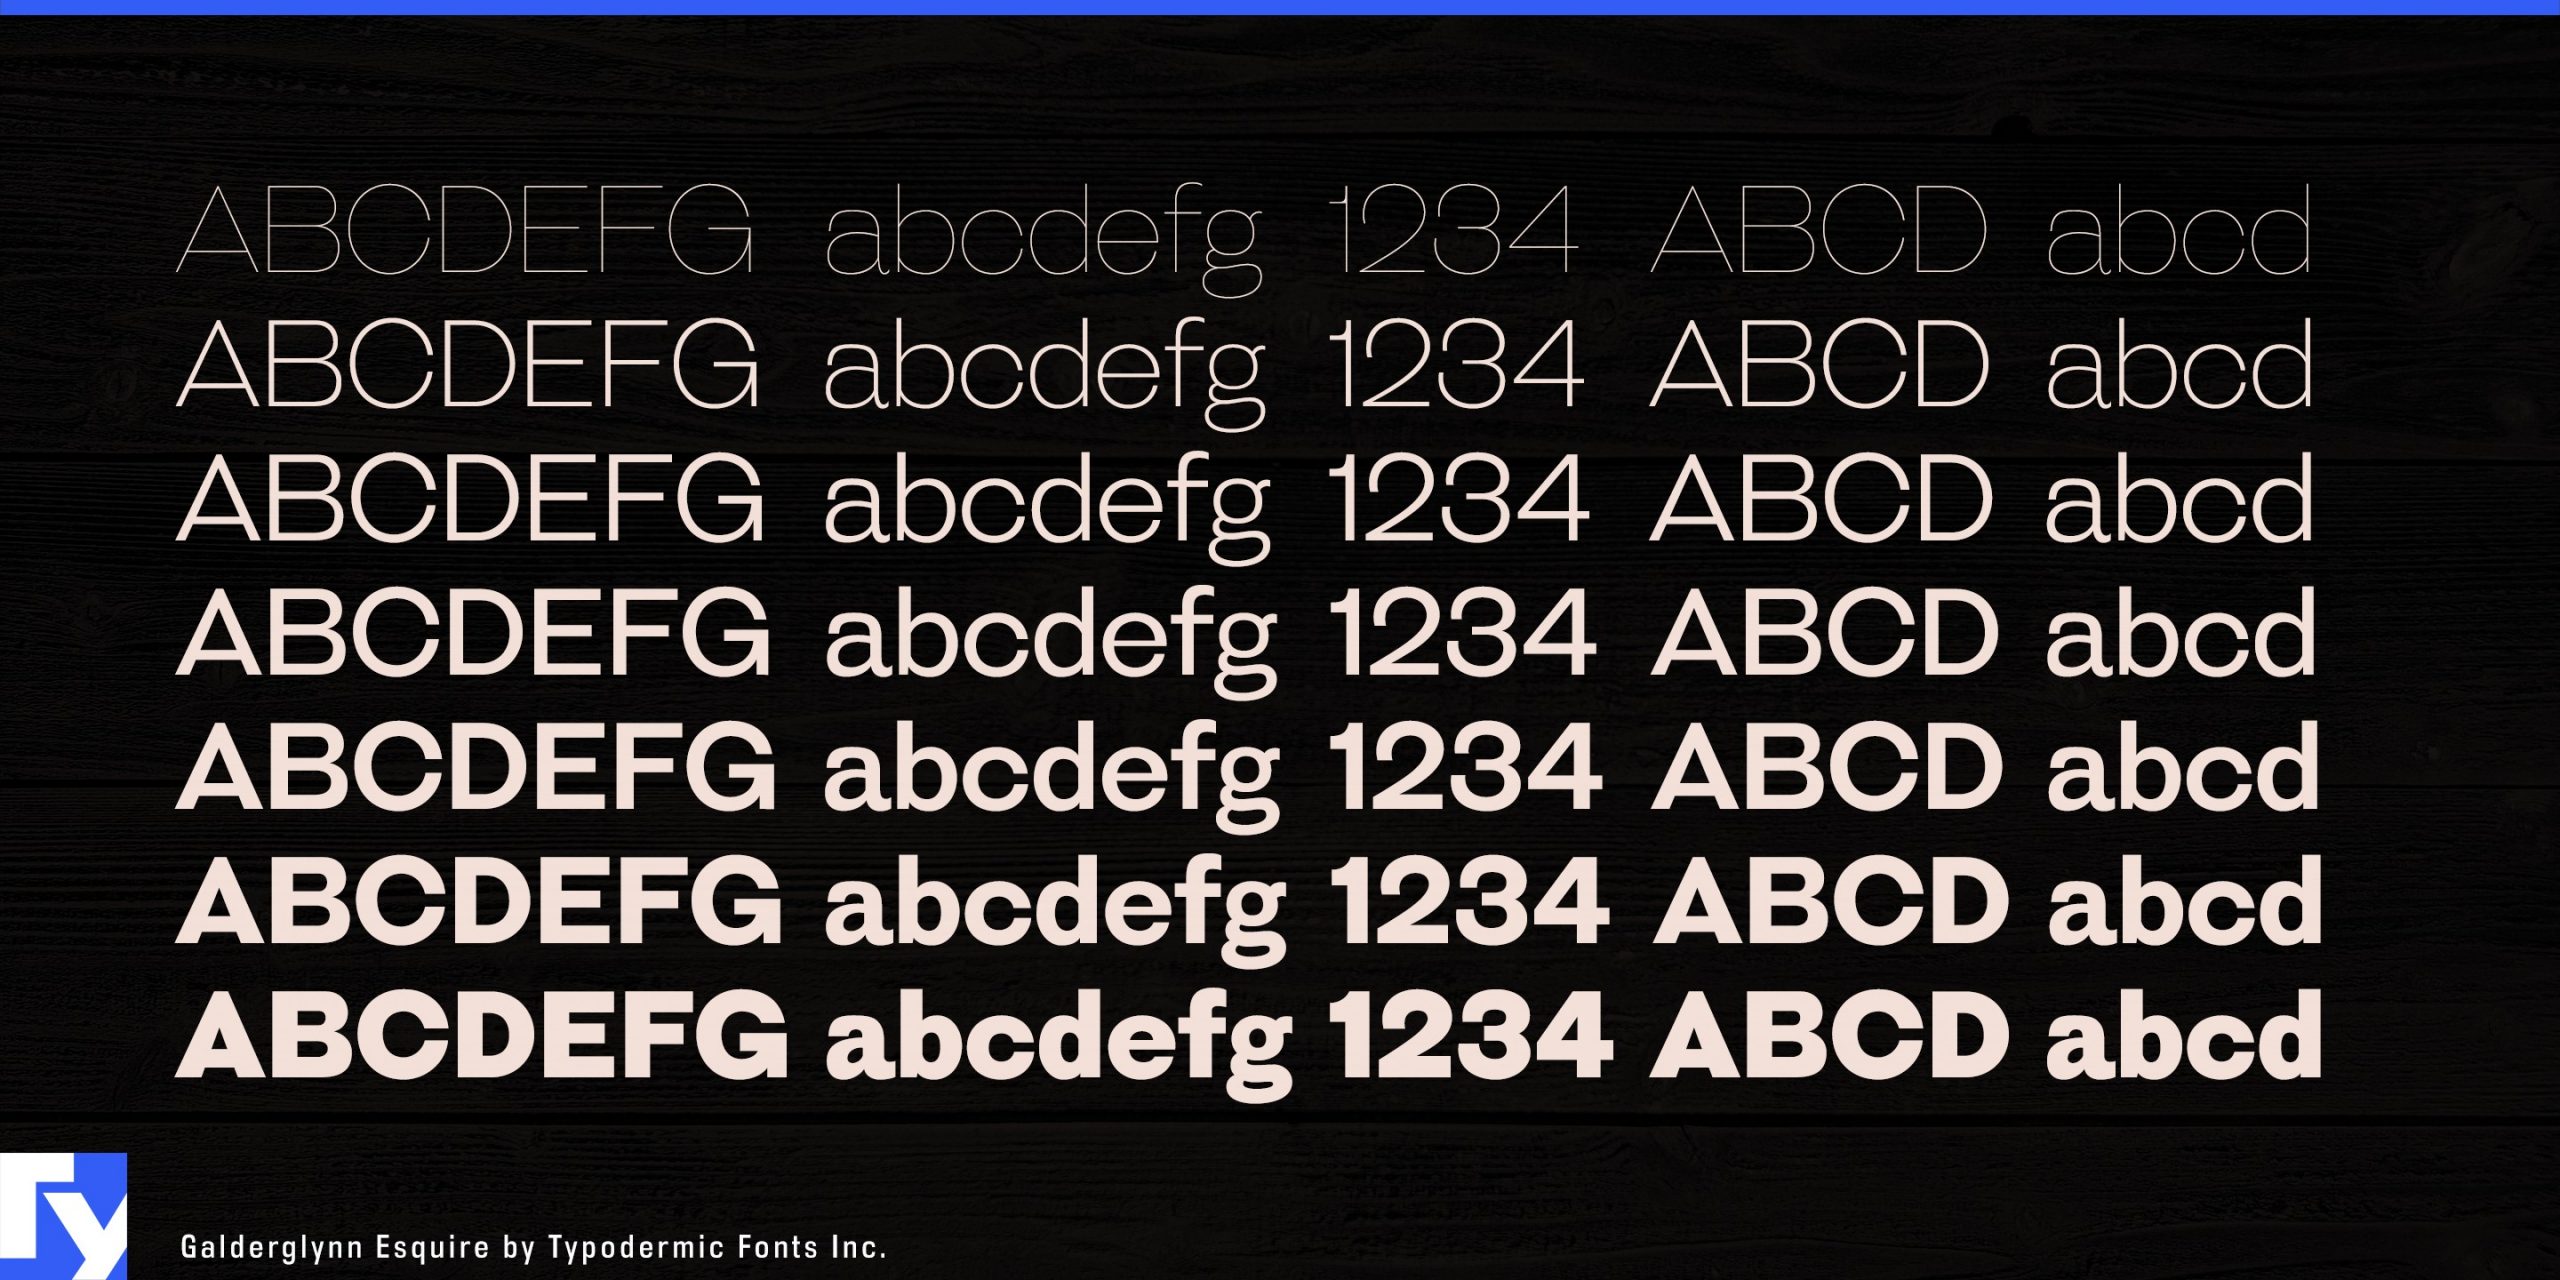 Seven Weights and Italics: Galderglynn Esquire Typeface Providing Abundant Design Options